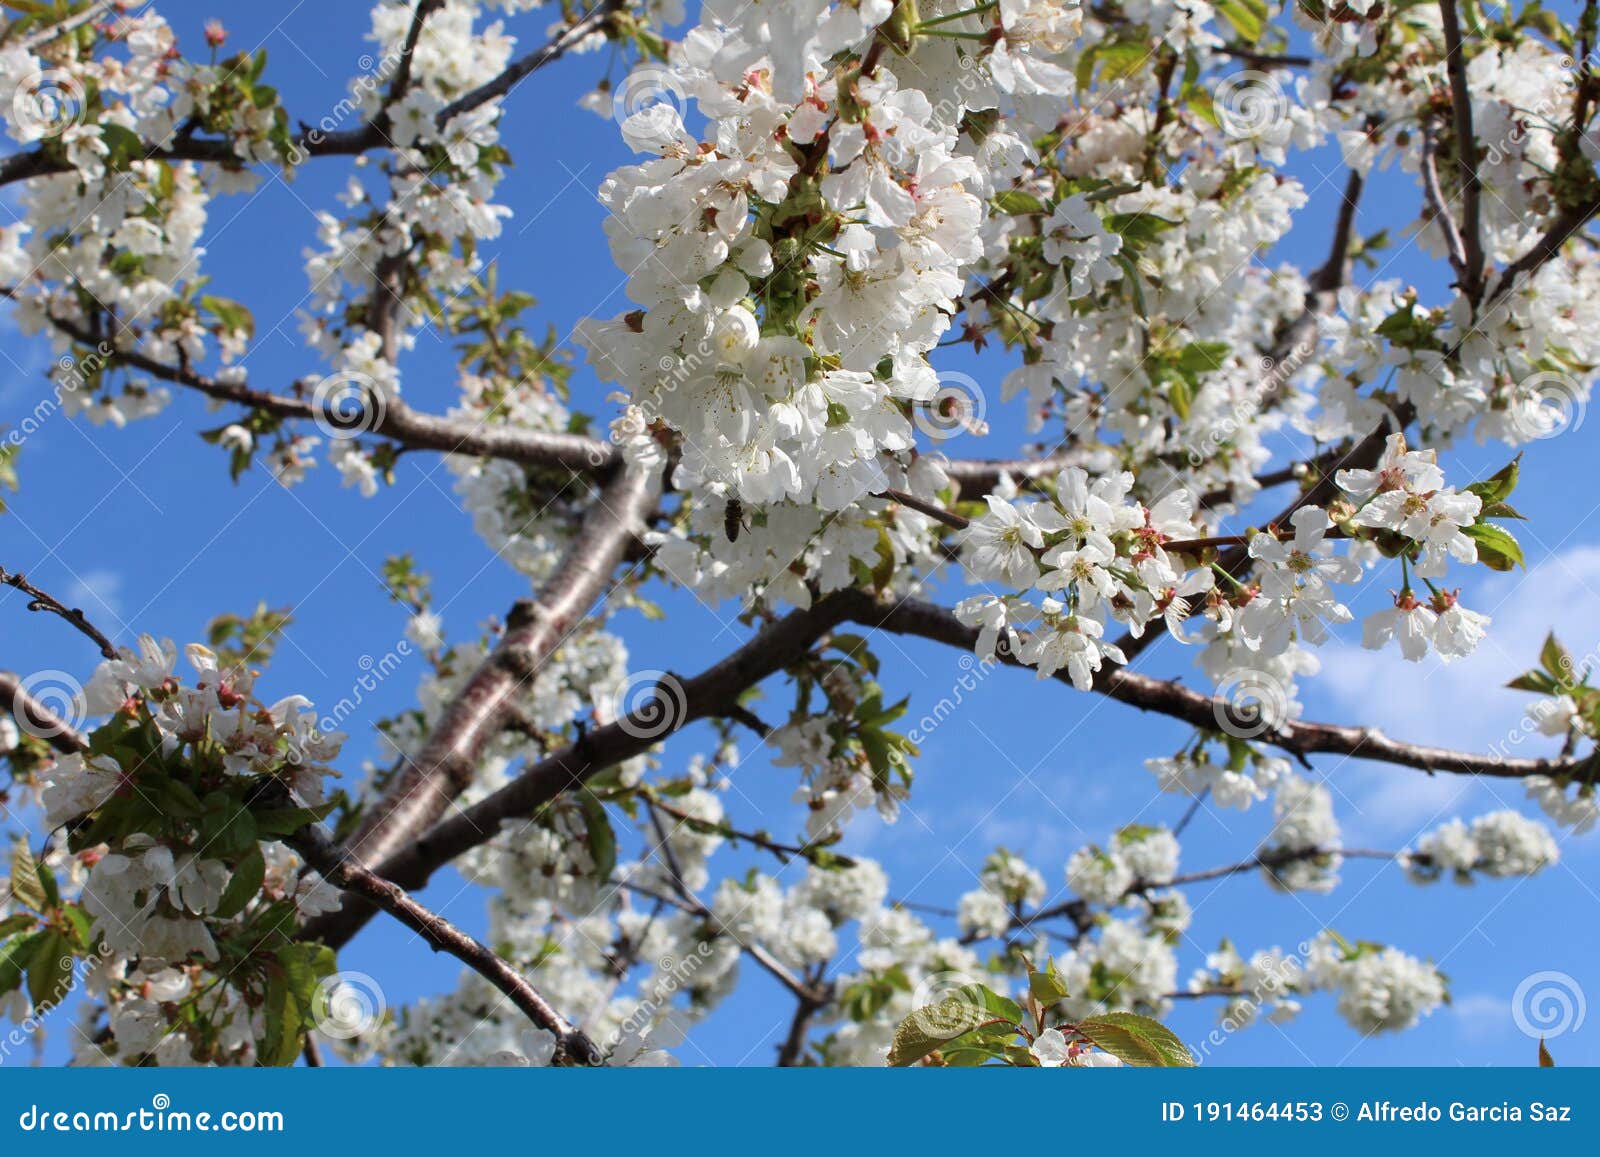 cherry blossom at jerte valley, cerezos en flor valle del jerte. cherry blossom flowers are in bloom.